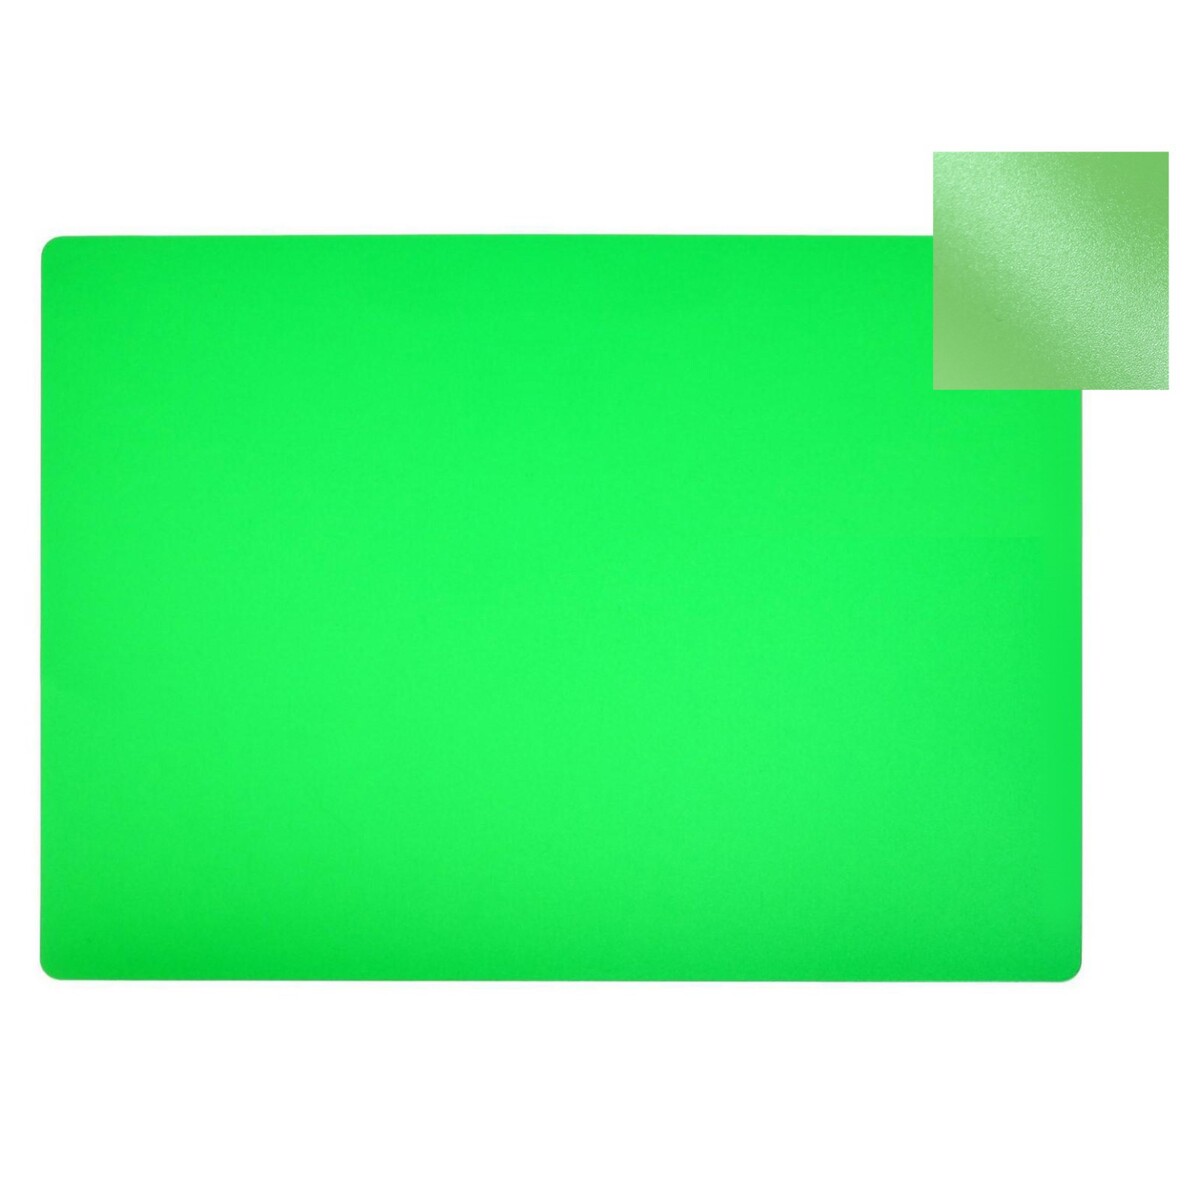 Накладка на стол пластиковая а4, 339 х 244 мм, 500 мкм, прозрачная, салатовая (подходит для офиса) нож консервный нержавеющий пластиковая ручка зеленый навеска daniks стандарт yw kt093s 1g d 031